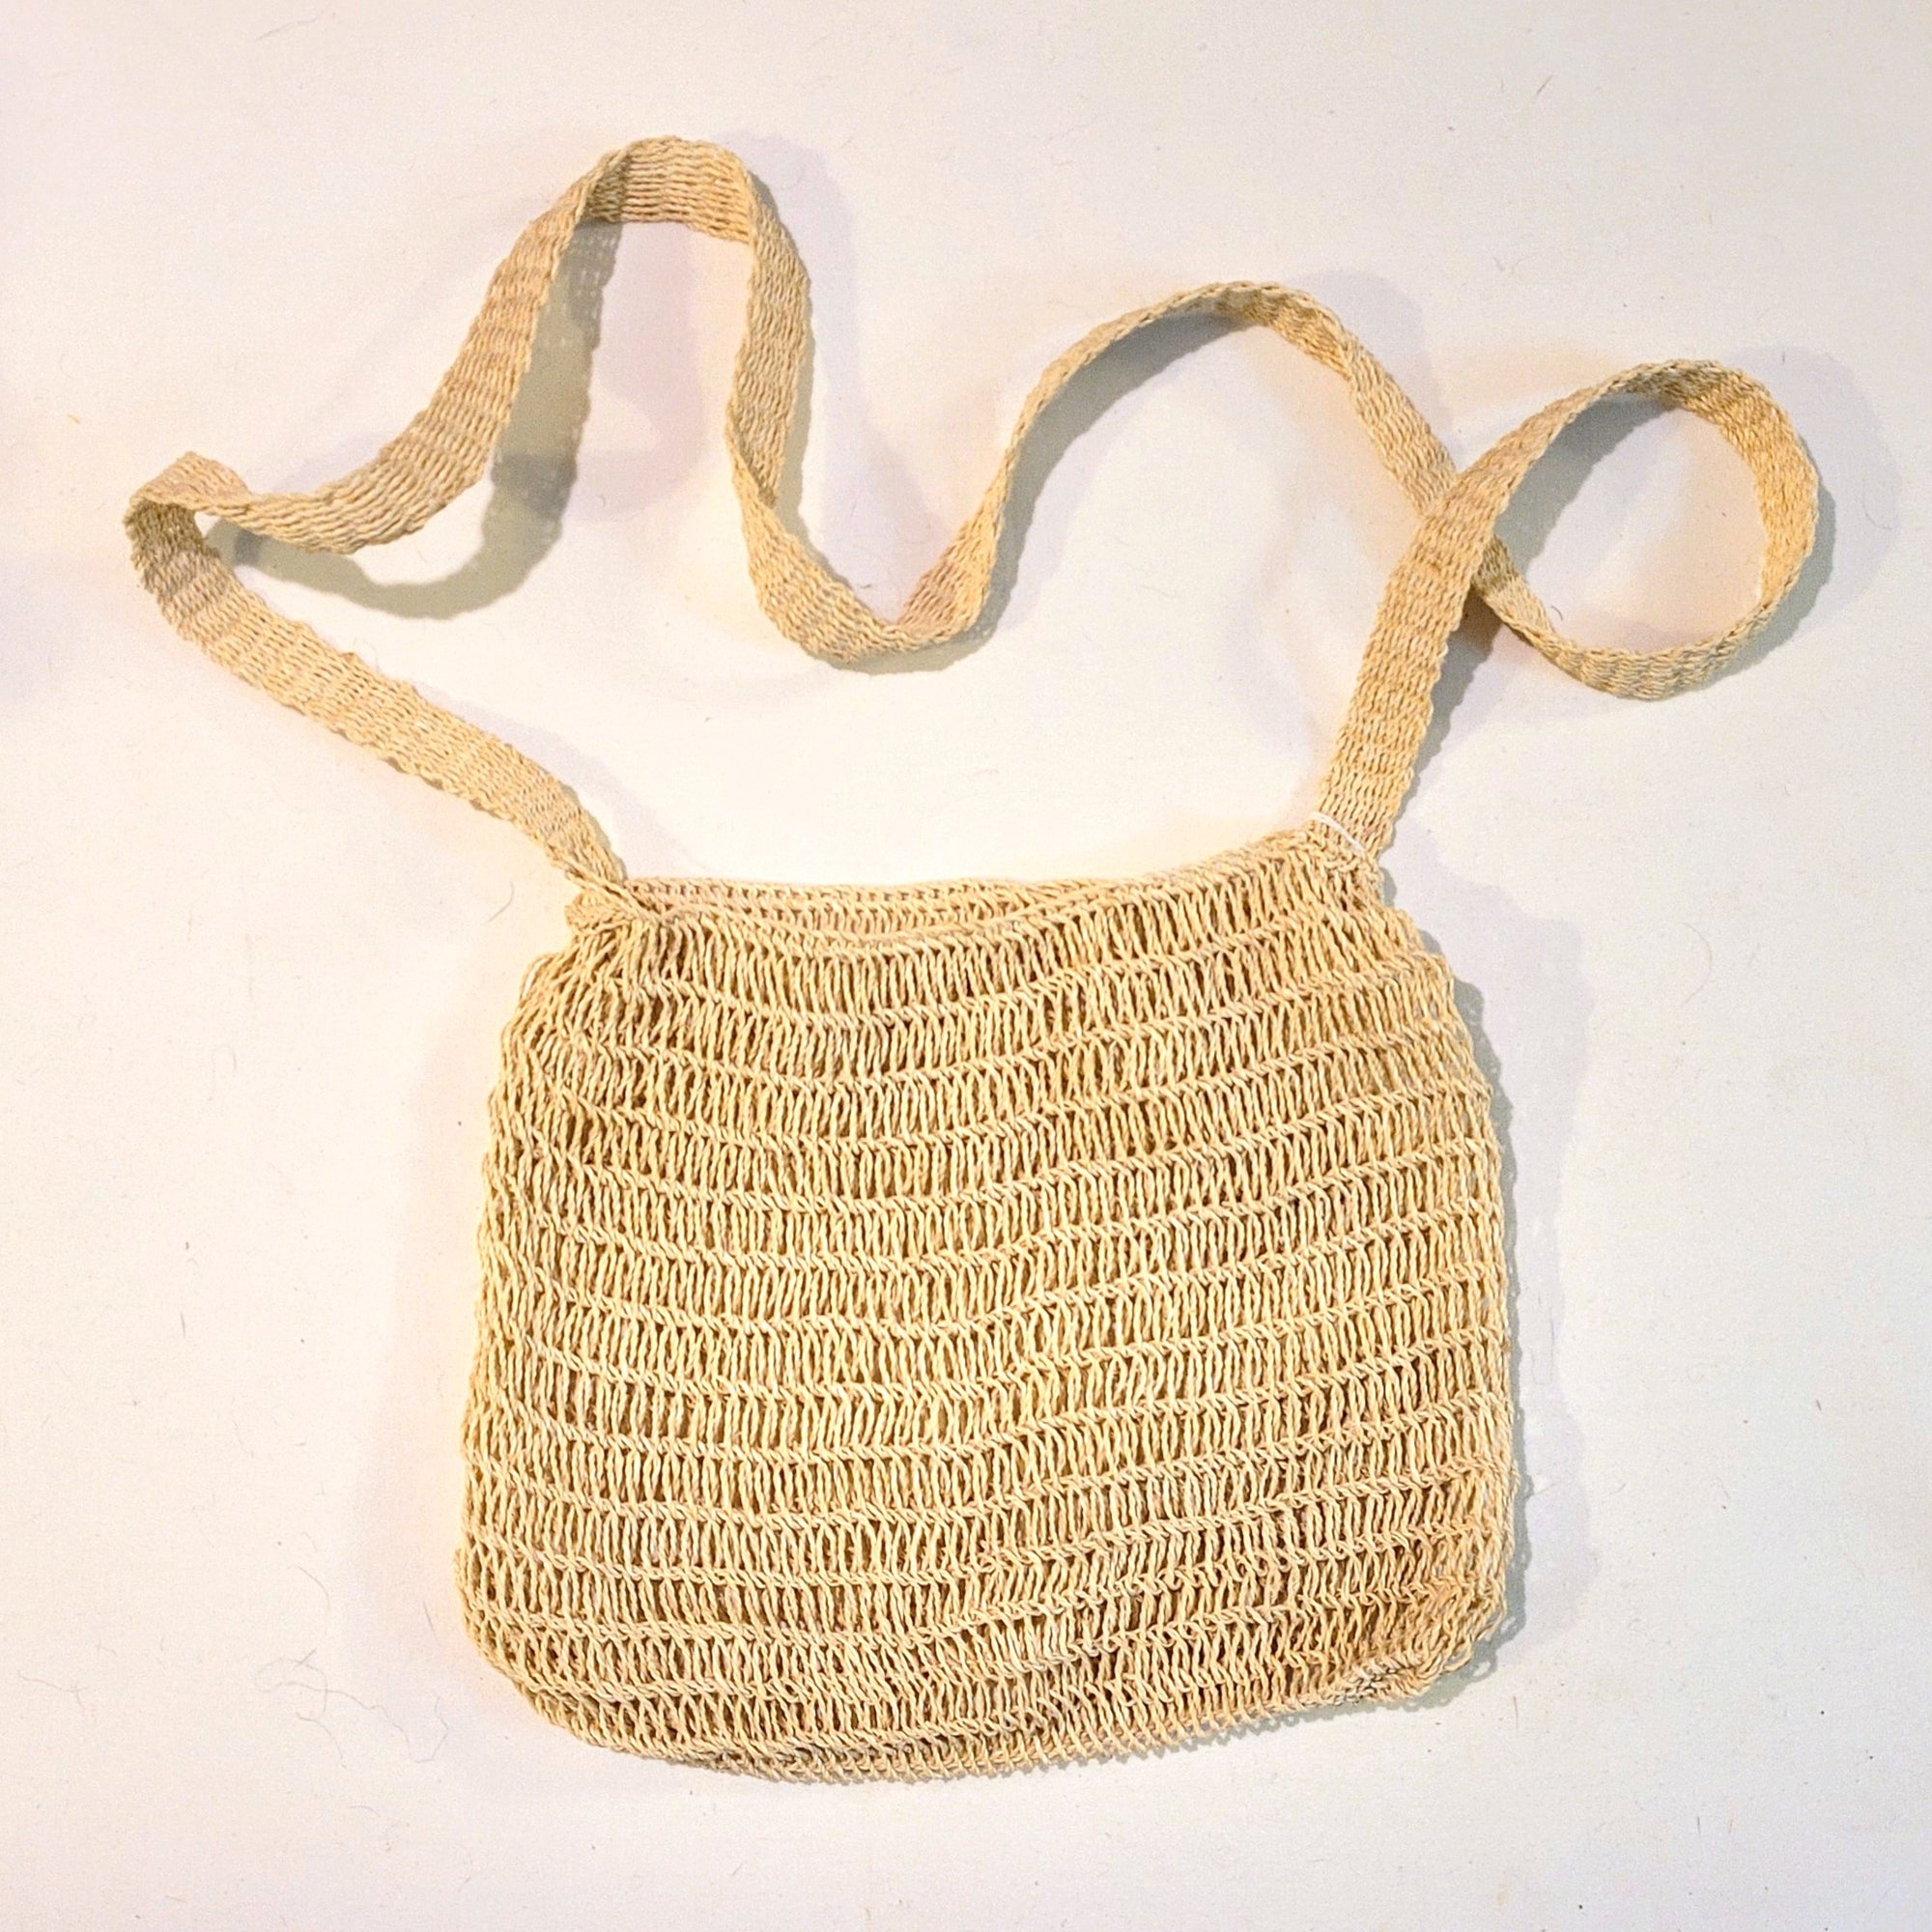 Natural Ivory colored Chambira Shoulder Bag made by a Peruvian Amazon artisan